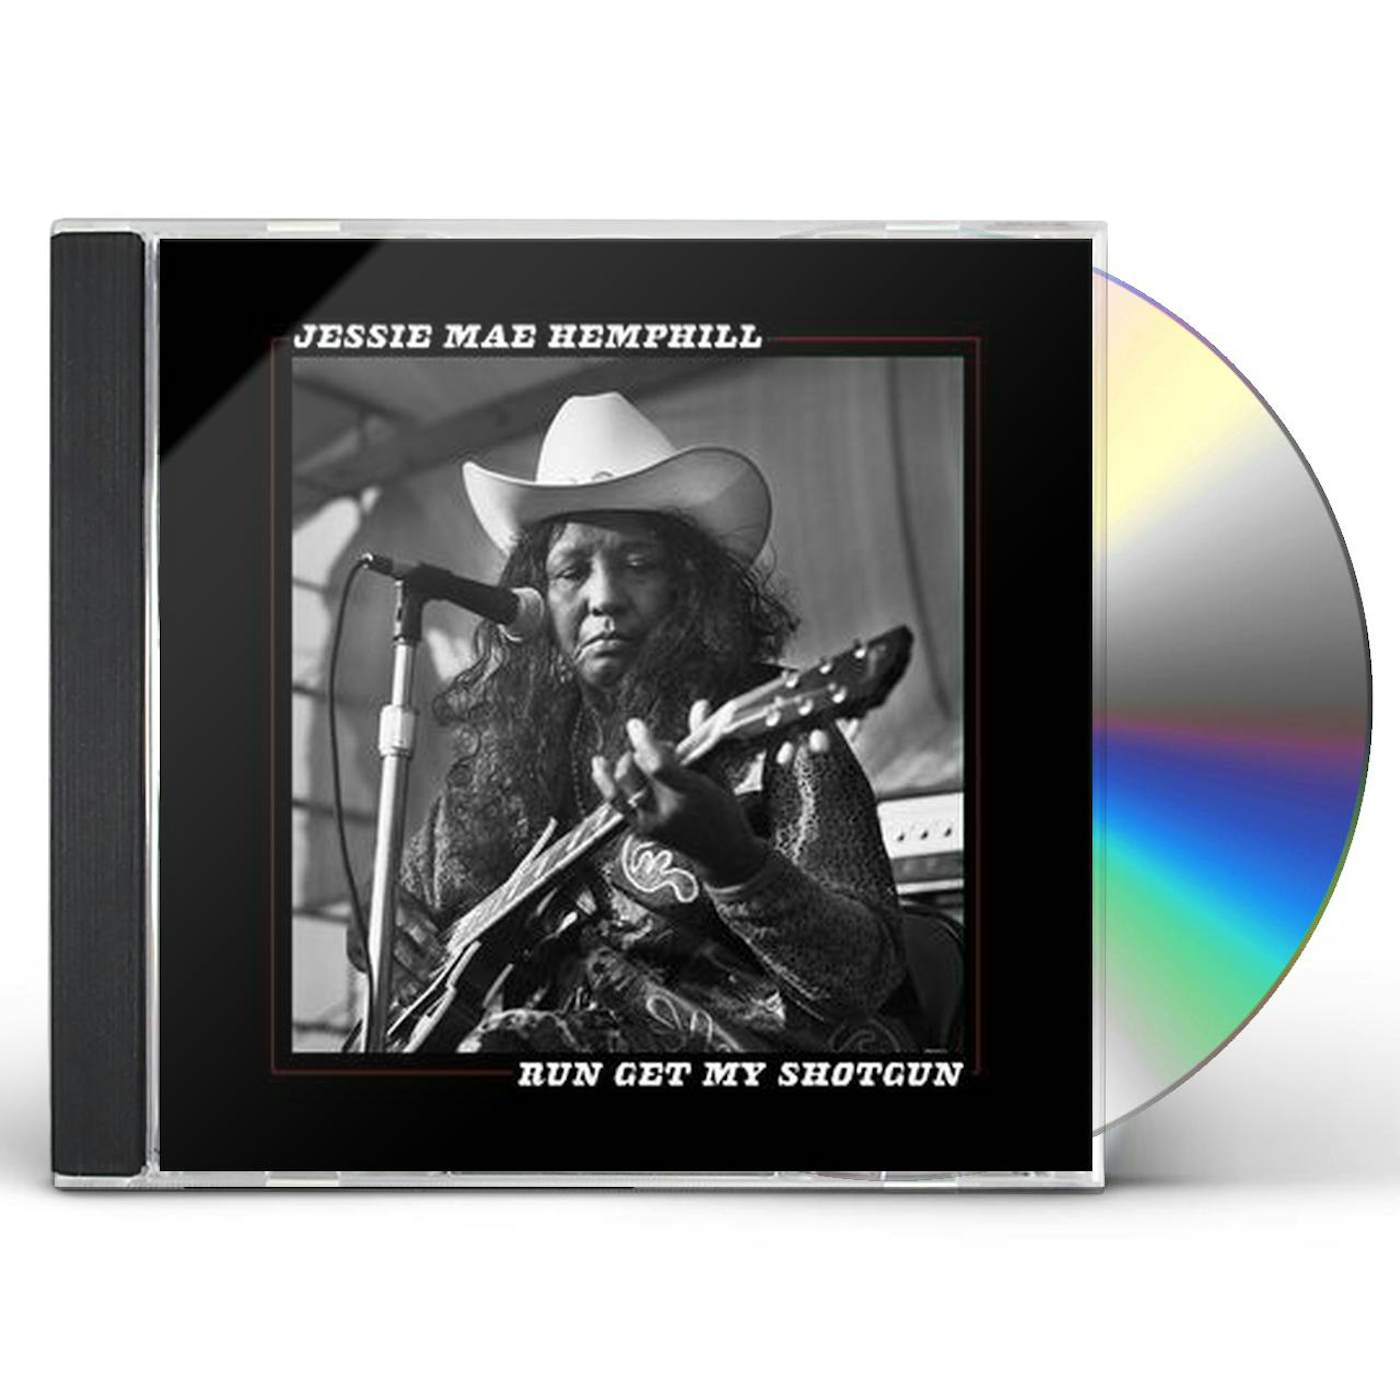 Jessie Mae Hemphill RUN GET MY SHOTGUN CD